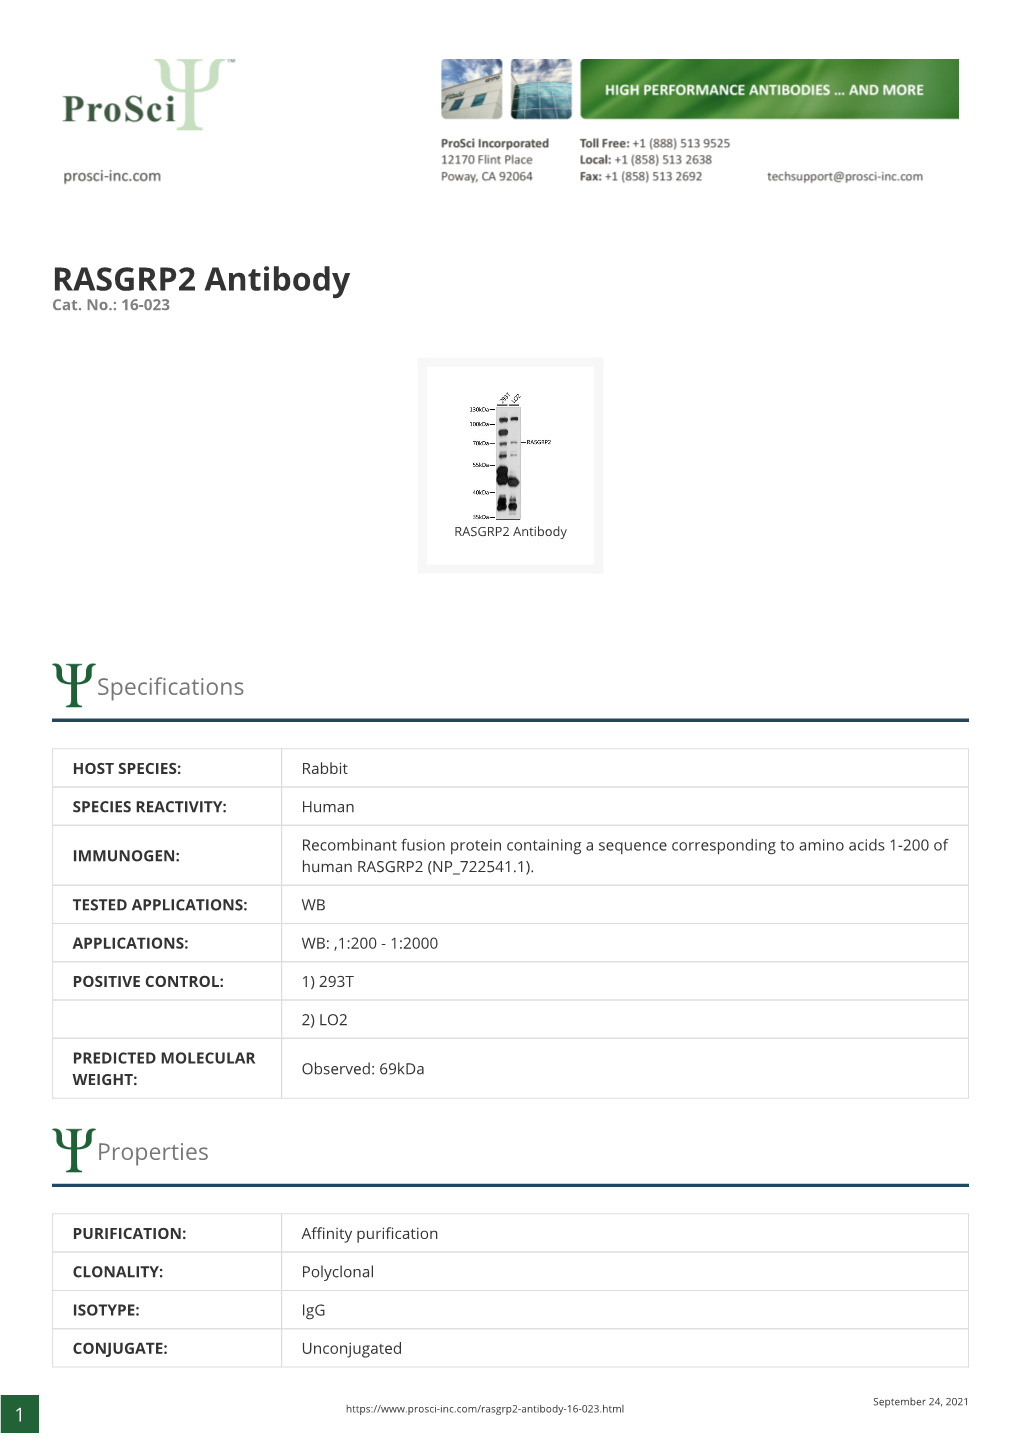 RASGRP2 Antibody Cat